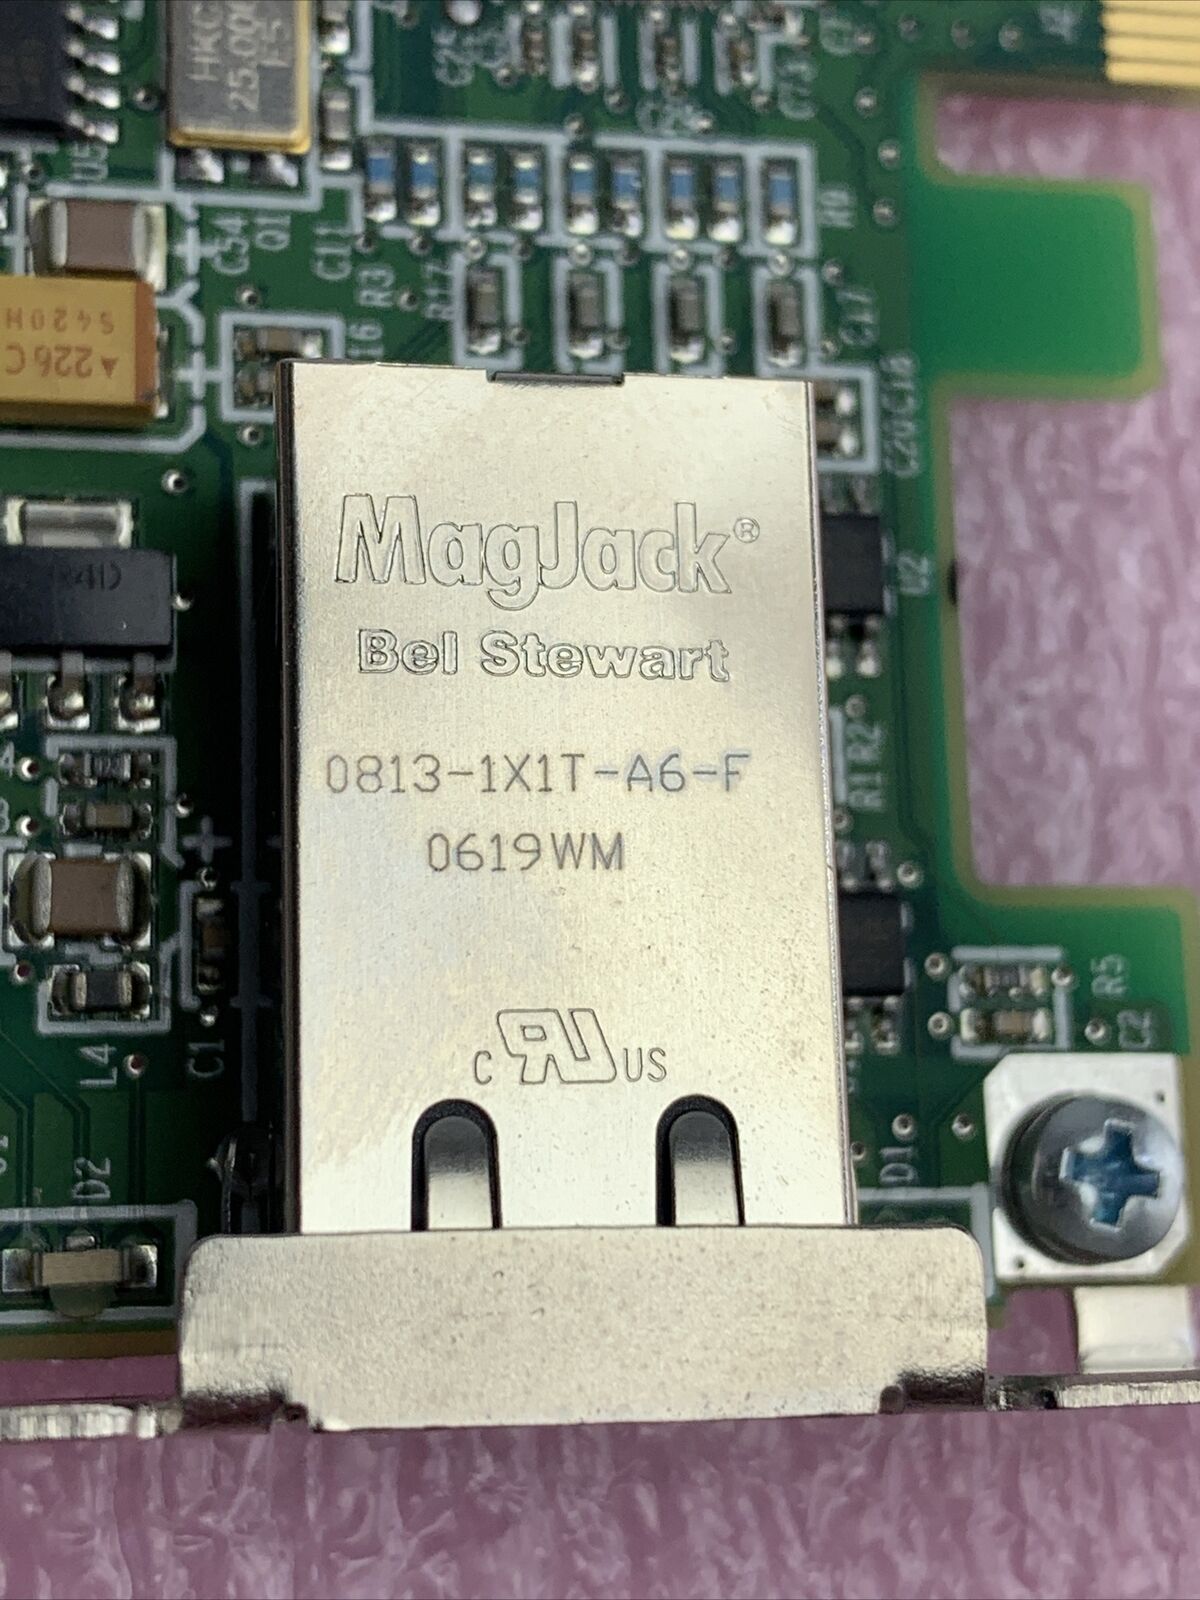 SysKonnect - SK-9E21D-10/100/1000Base-T Adapter PCI Express